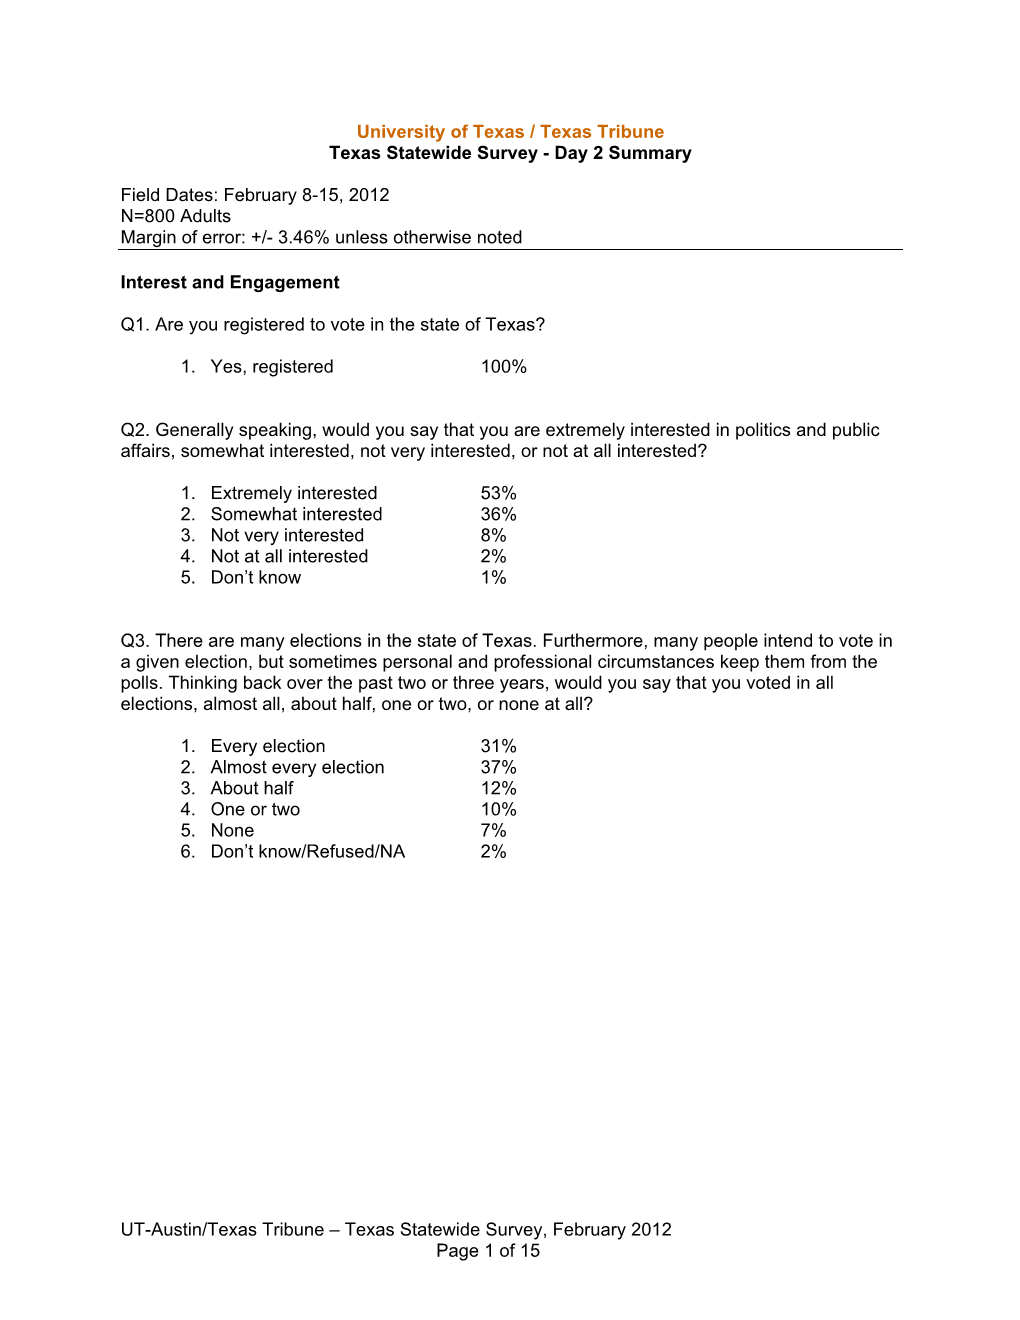 UT-Austin/Texas Tribune – Texas Statewide Survey, February 2012 Page 1 of 15